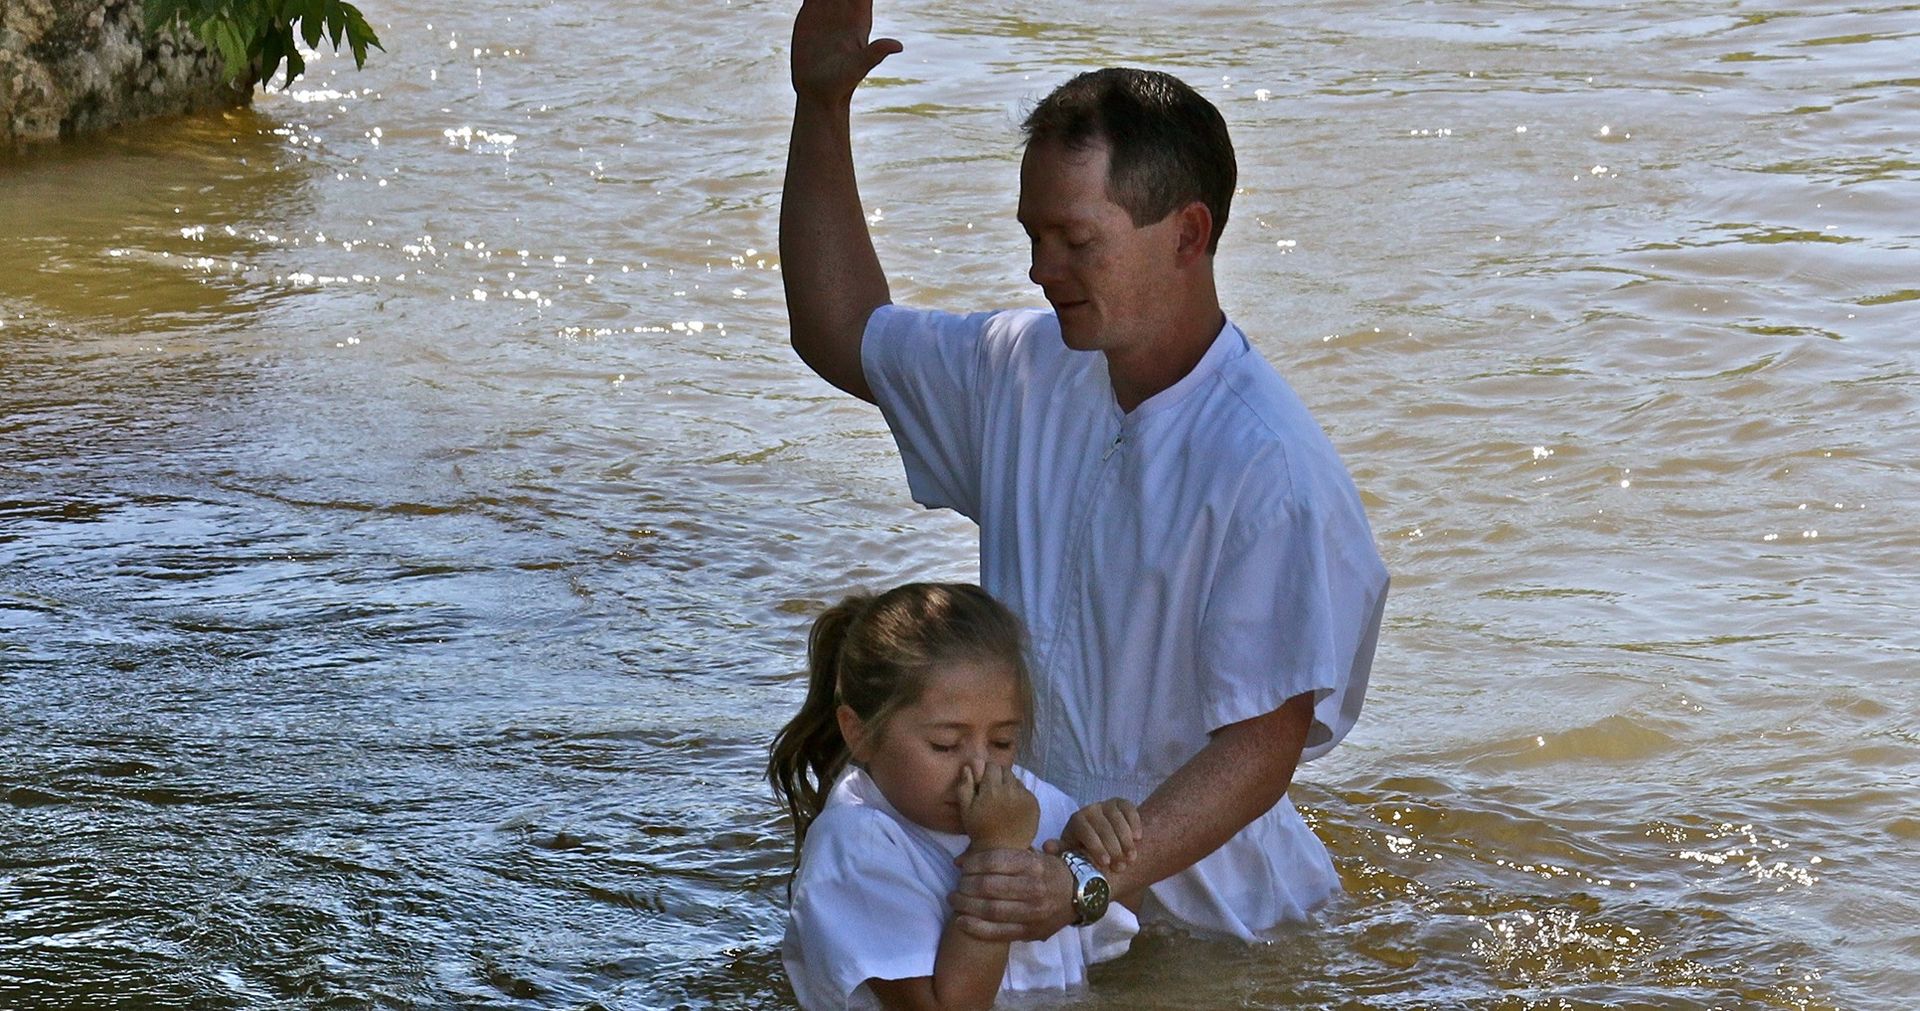 A man baptizing a little girl in a river.